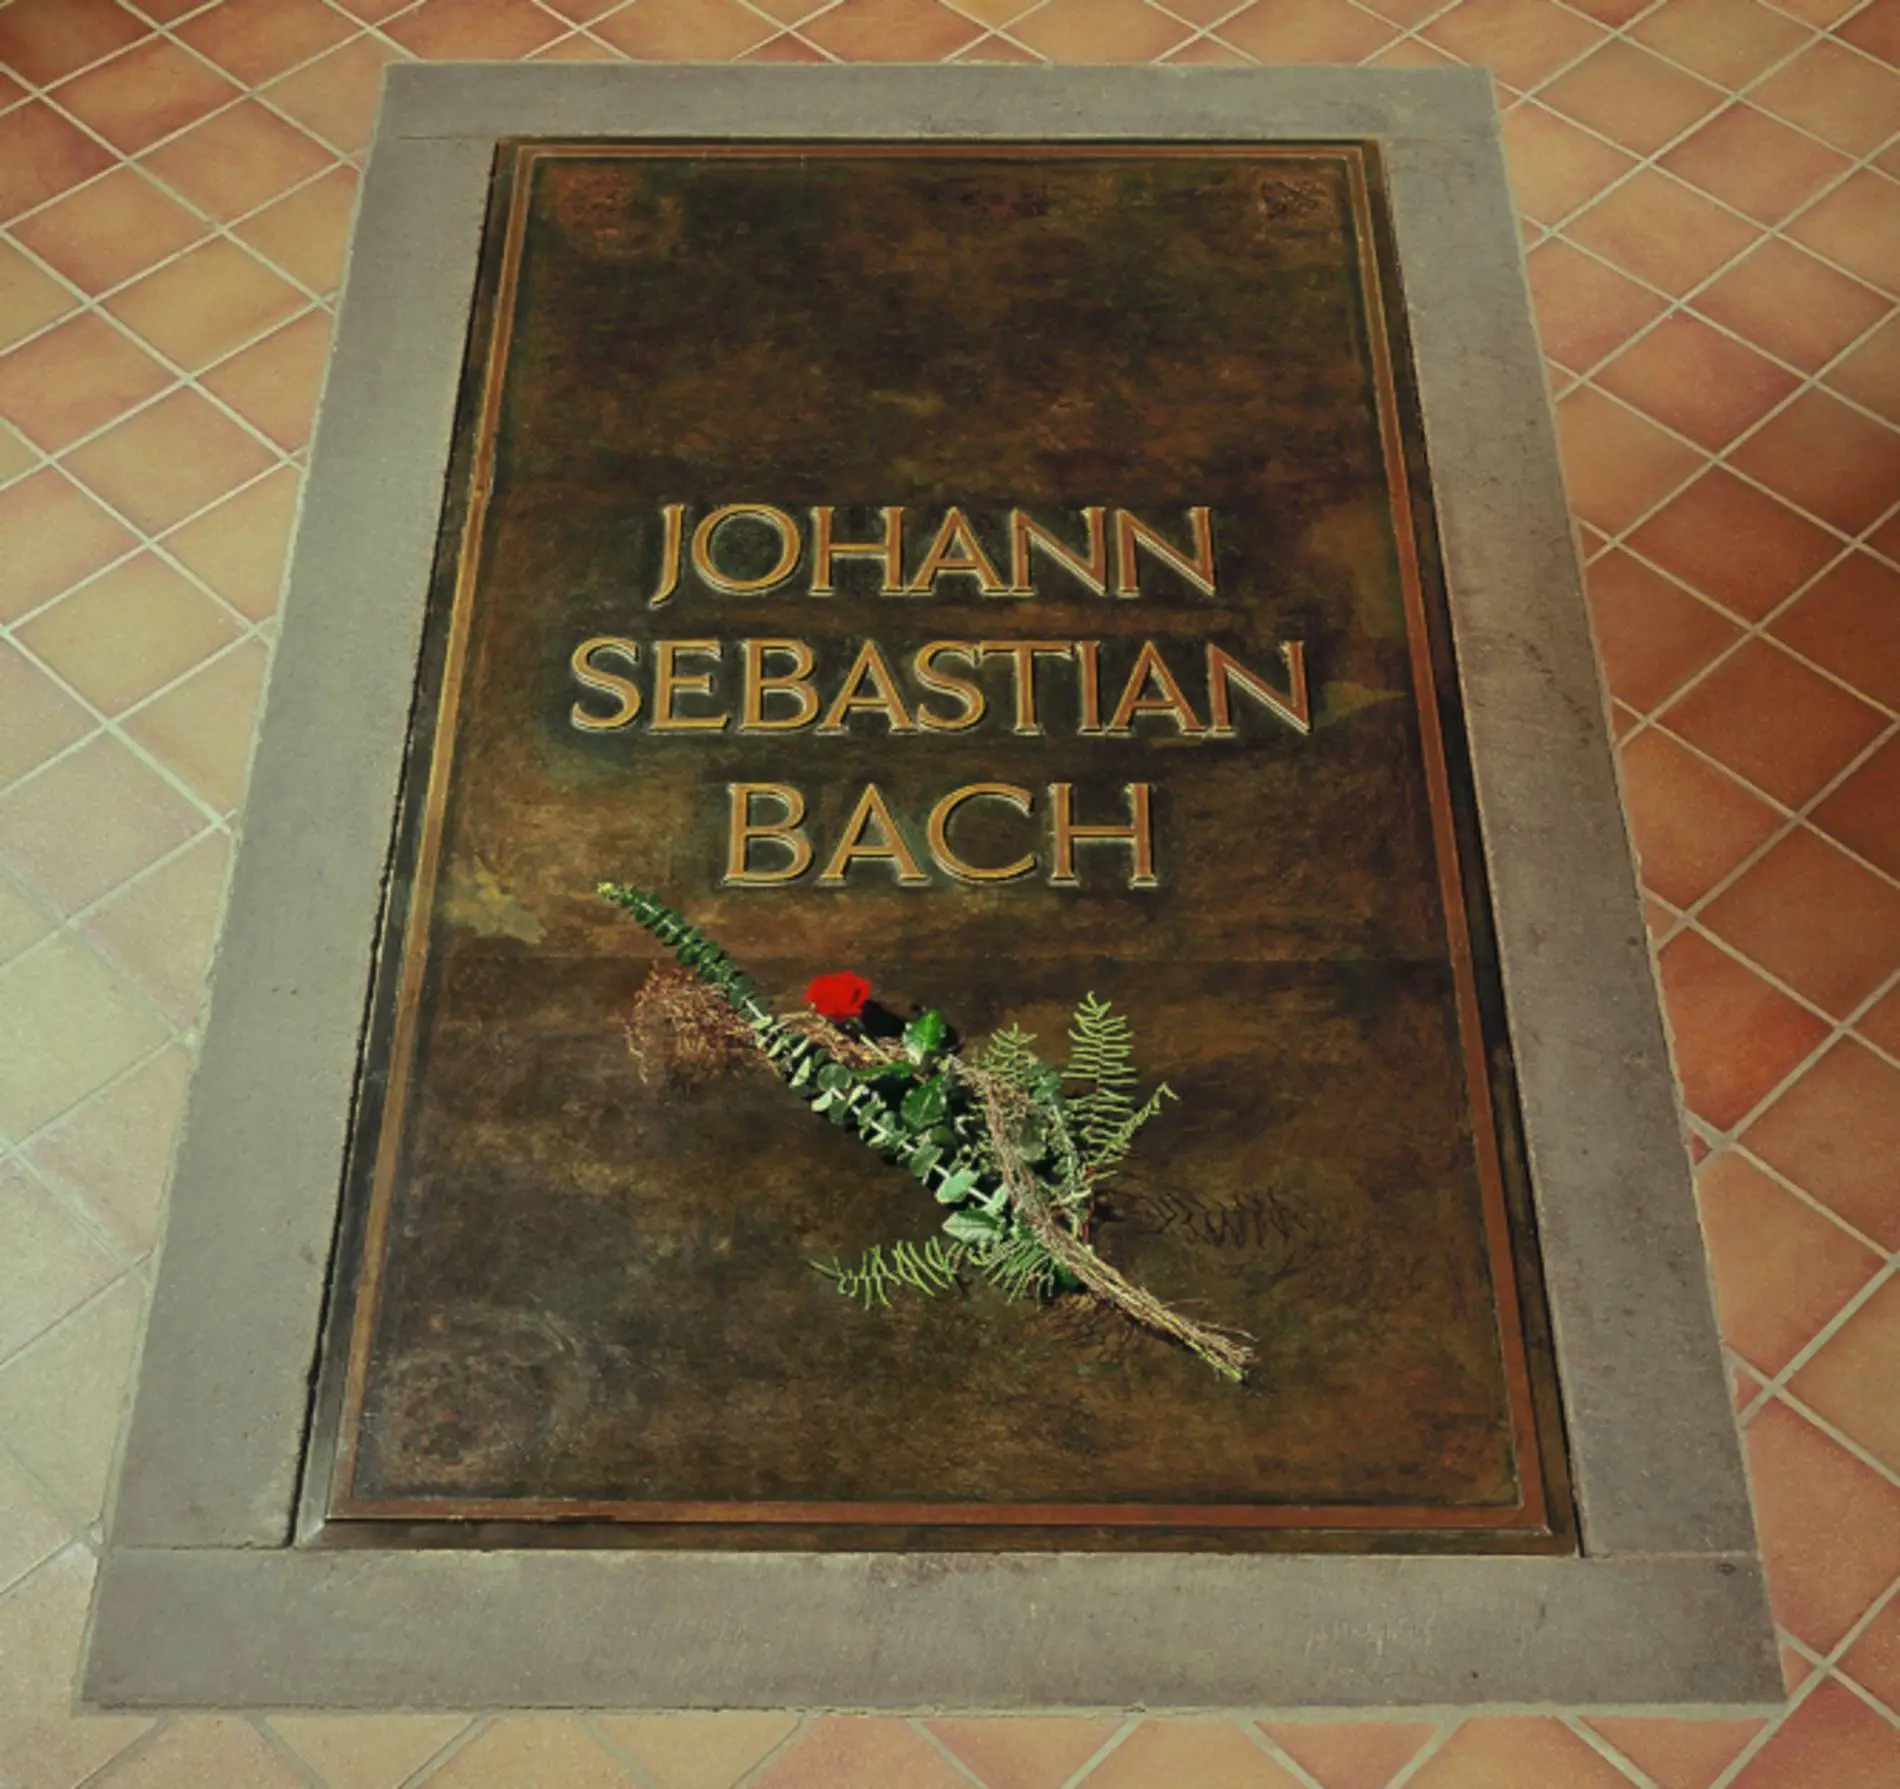 Bachgrab tomb Leipzig Johann Sebastian Bach Travel Reisen Culture Tourism Reiseführer Travel guide Classic Opera